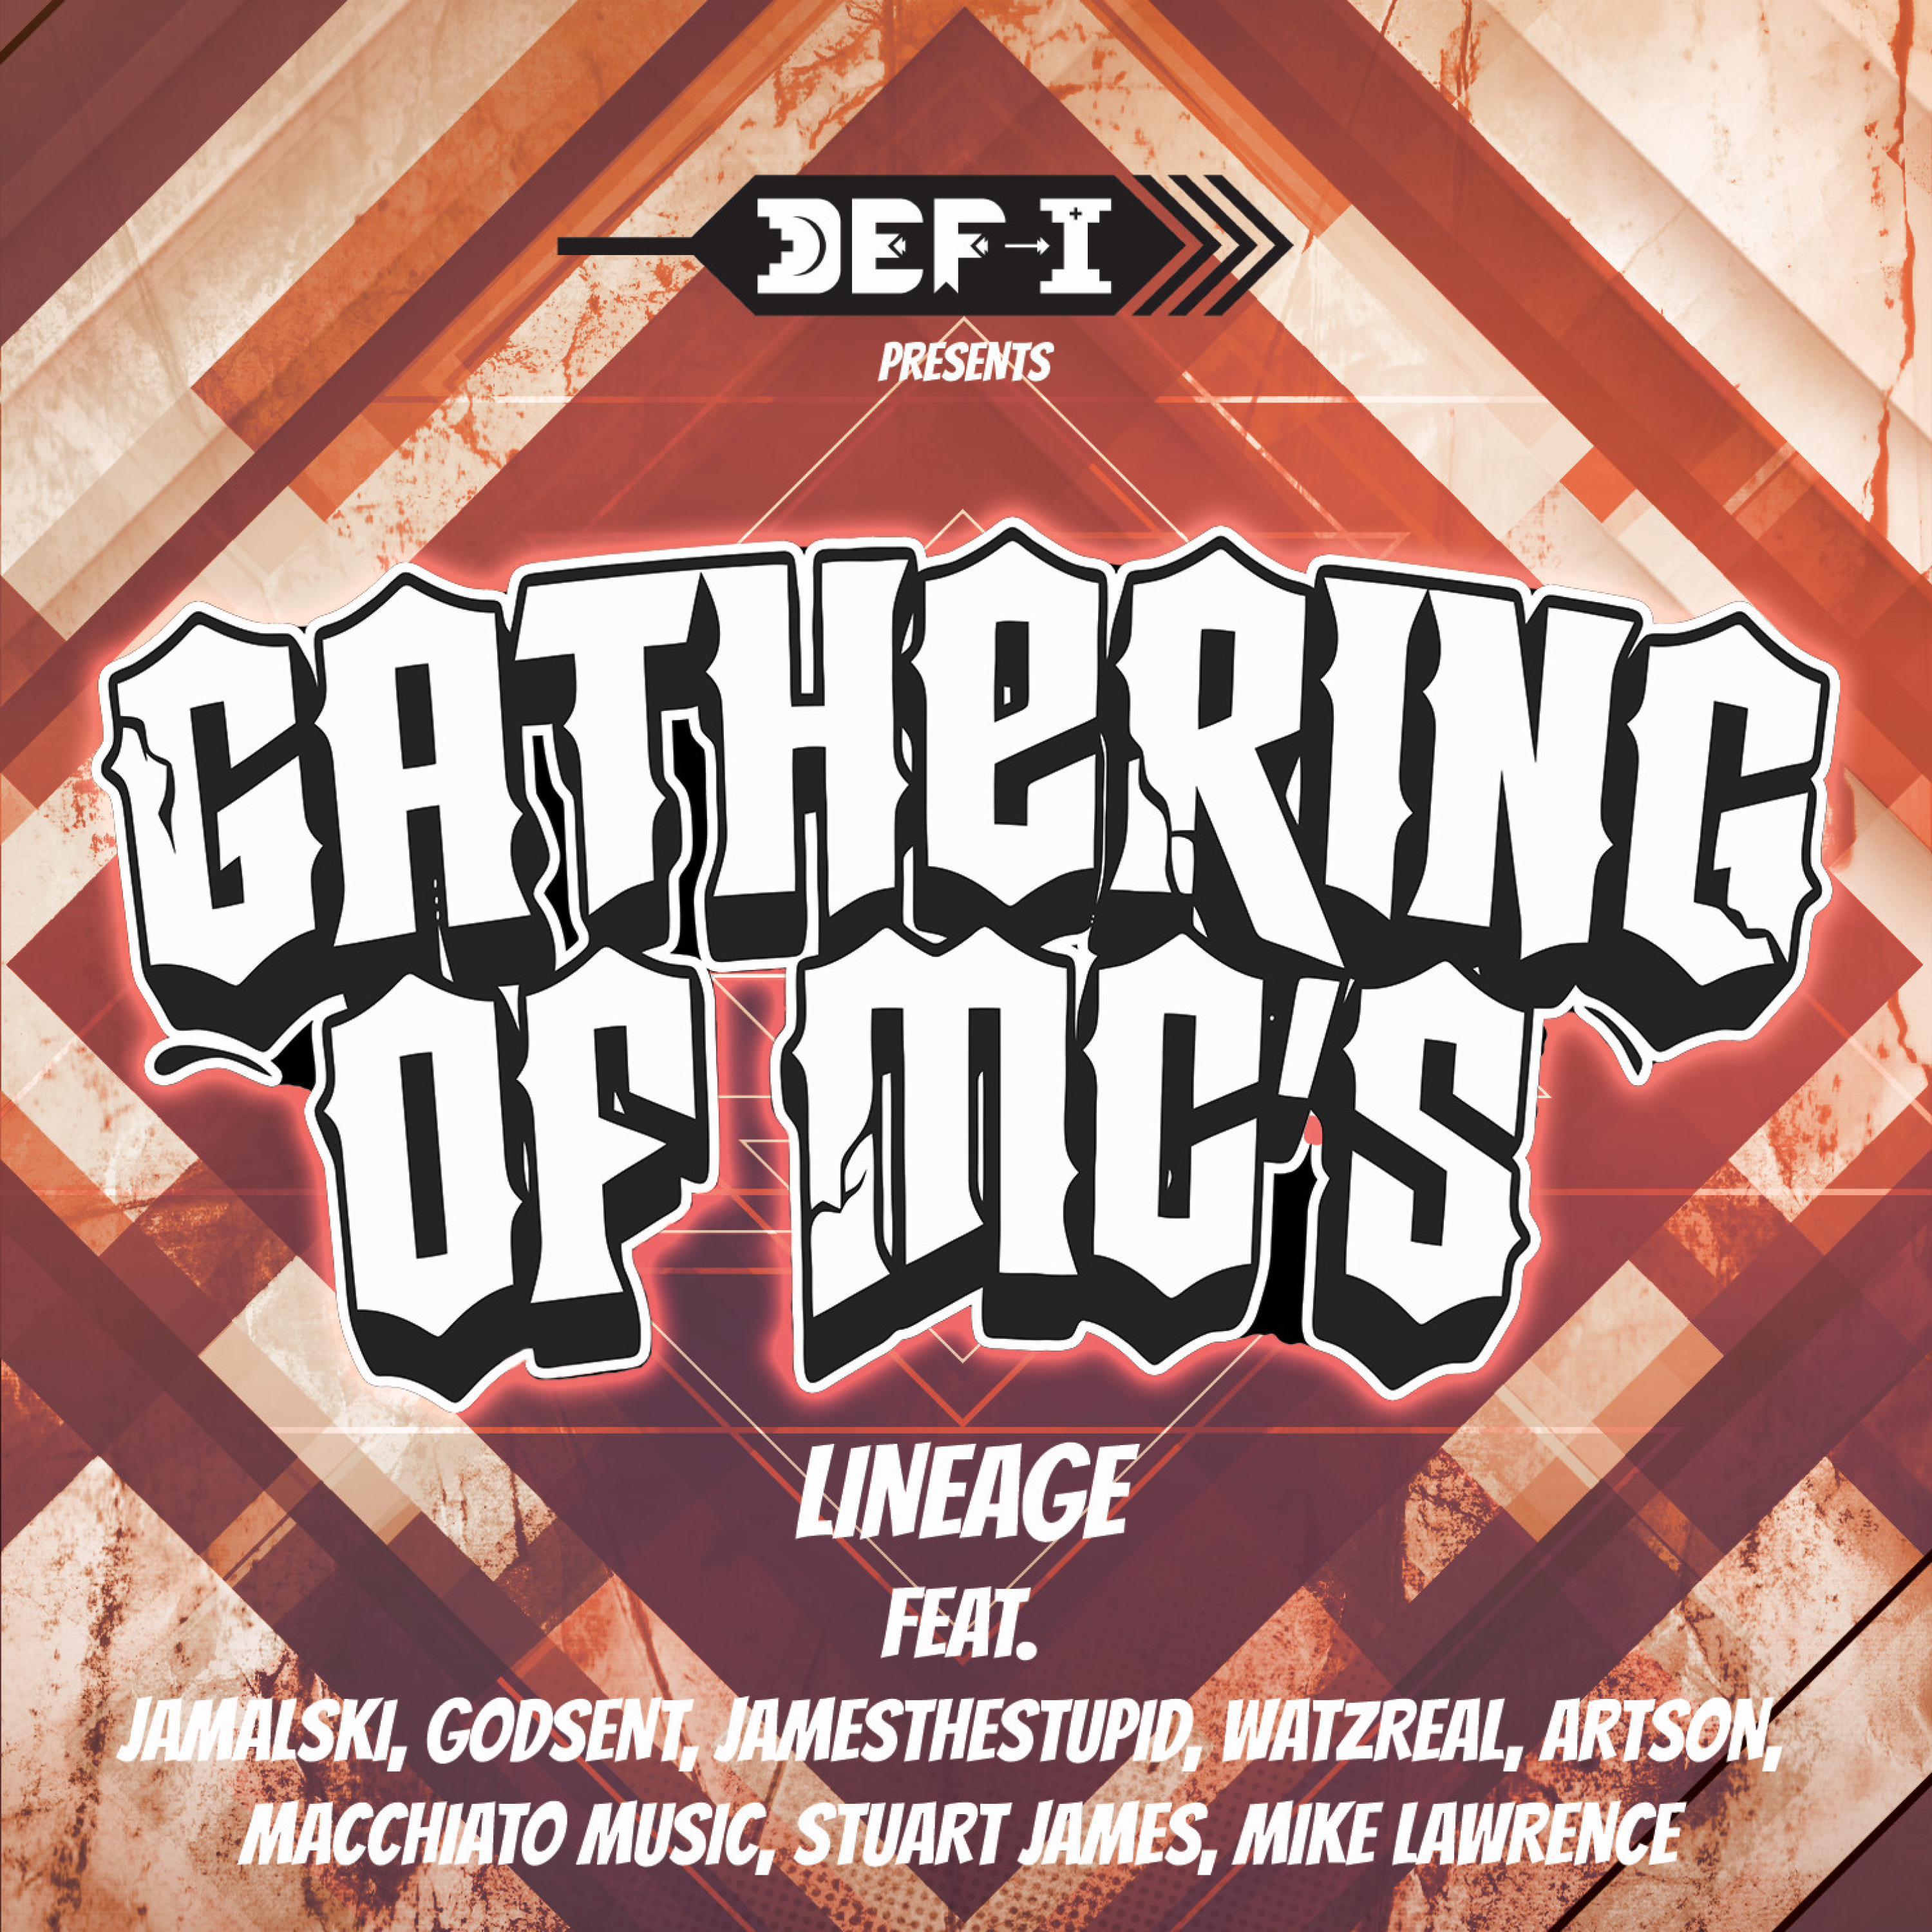 Def-I - Gathering of MCs Lineage (feat. Jamalski, Godsent, James The Stupid, Watzreal, Artson, Zay_islike, Barrach, Killa T & Mike Lawrence)